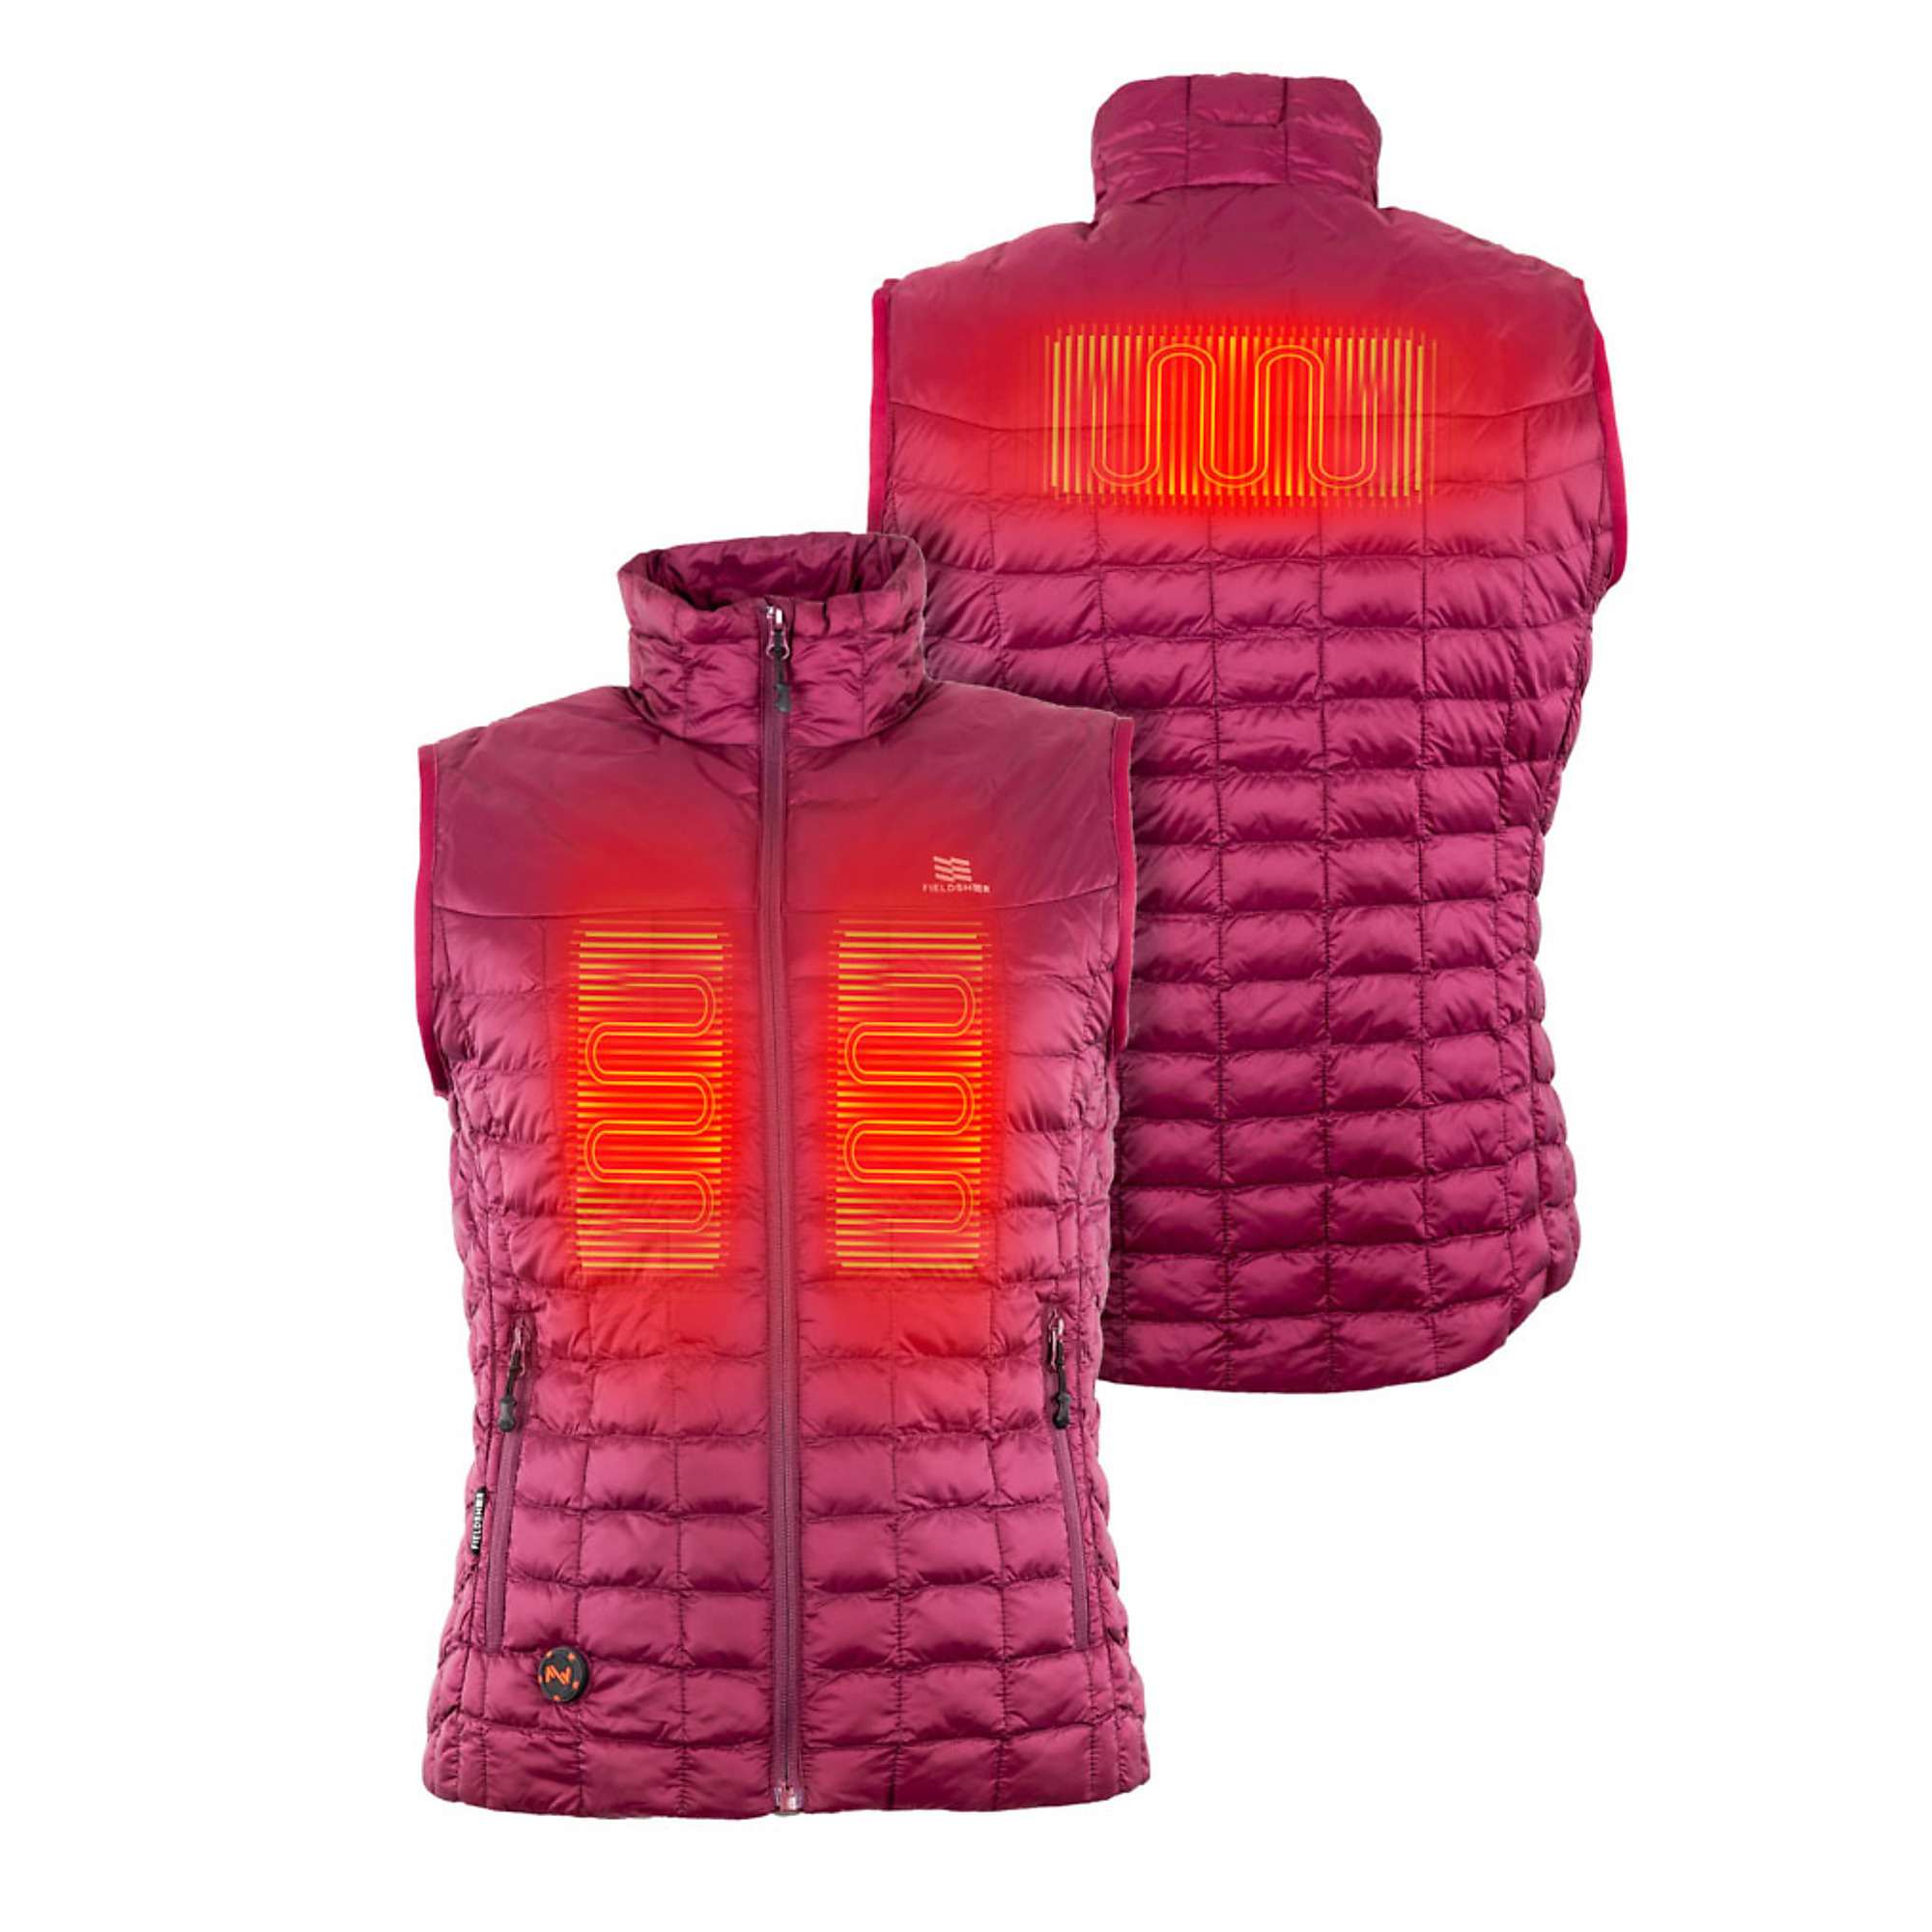 Fieldsheer, Women's 7.4v Backcountry Heated Vest, Size XS, Color Red, Model MWWV04310120